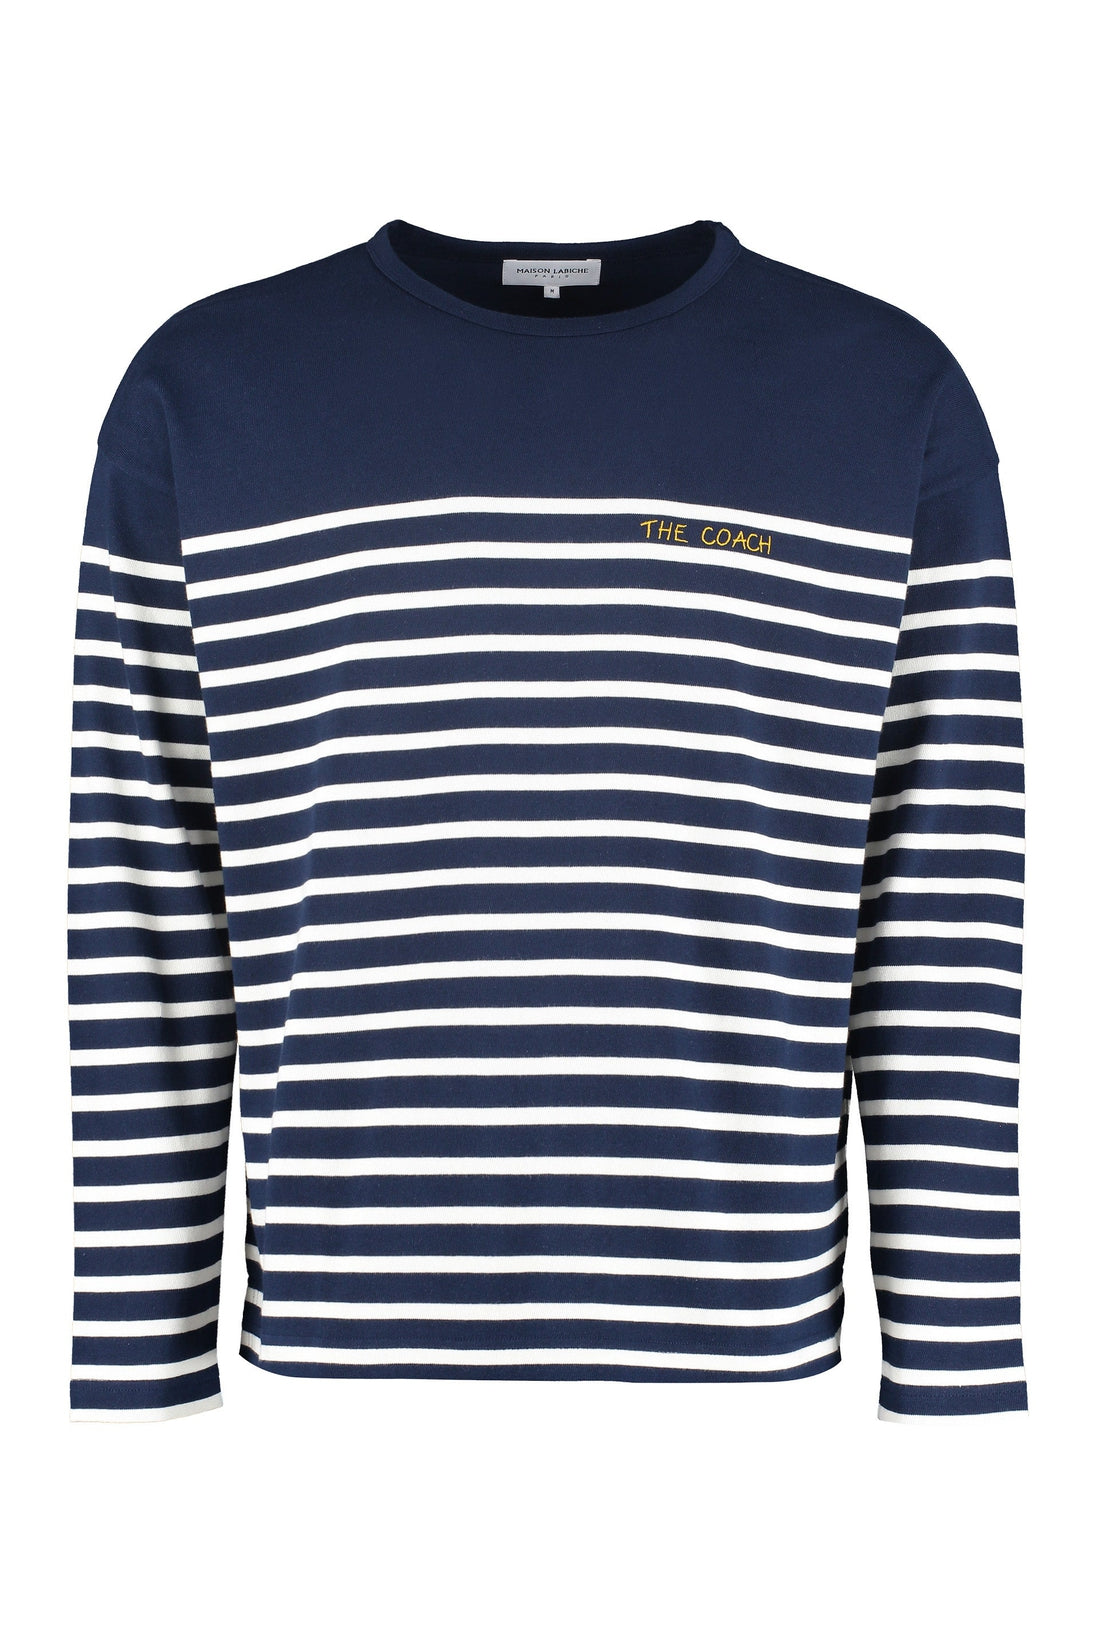 Maison Labiche-OUTLET-SALE-Striped crew-neck sweater-ARCHIVIST